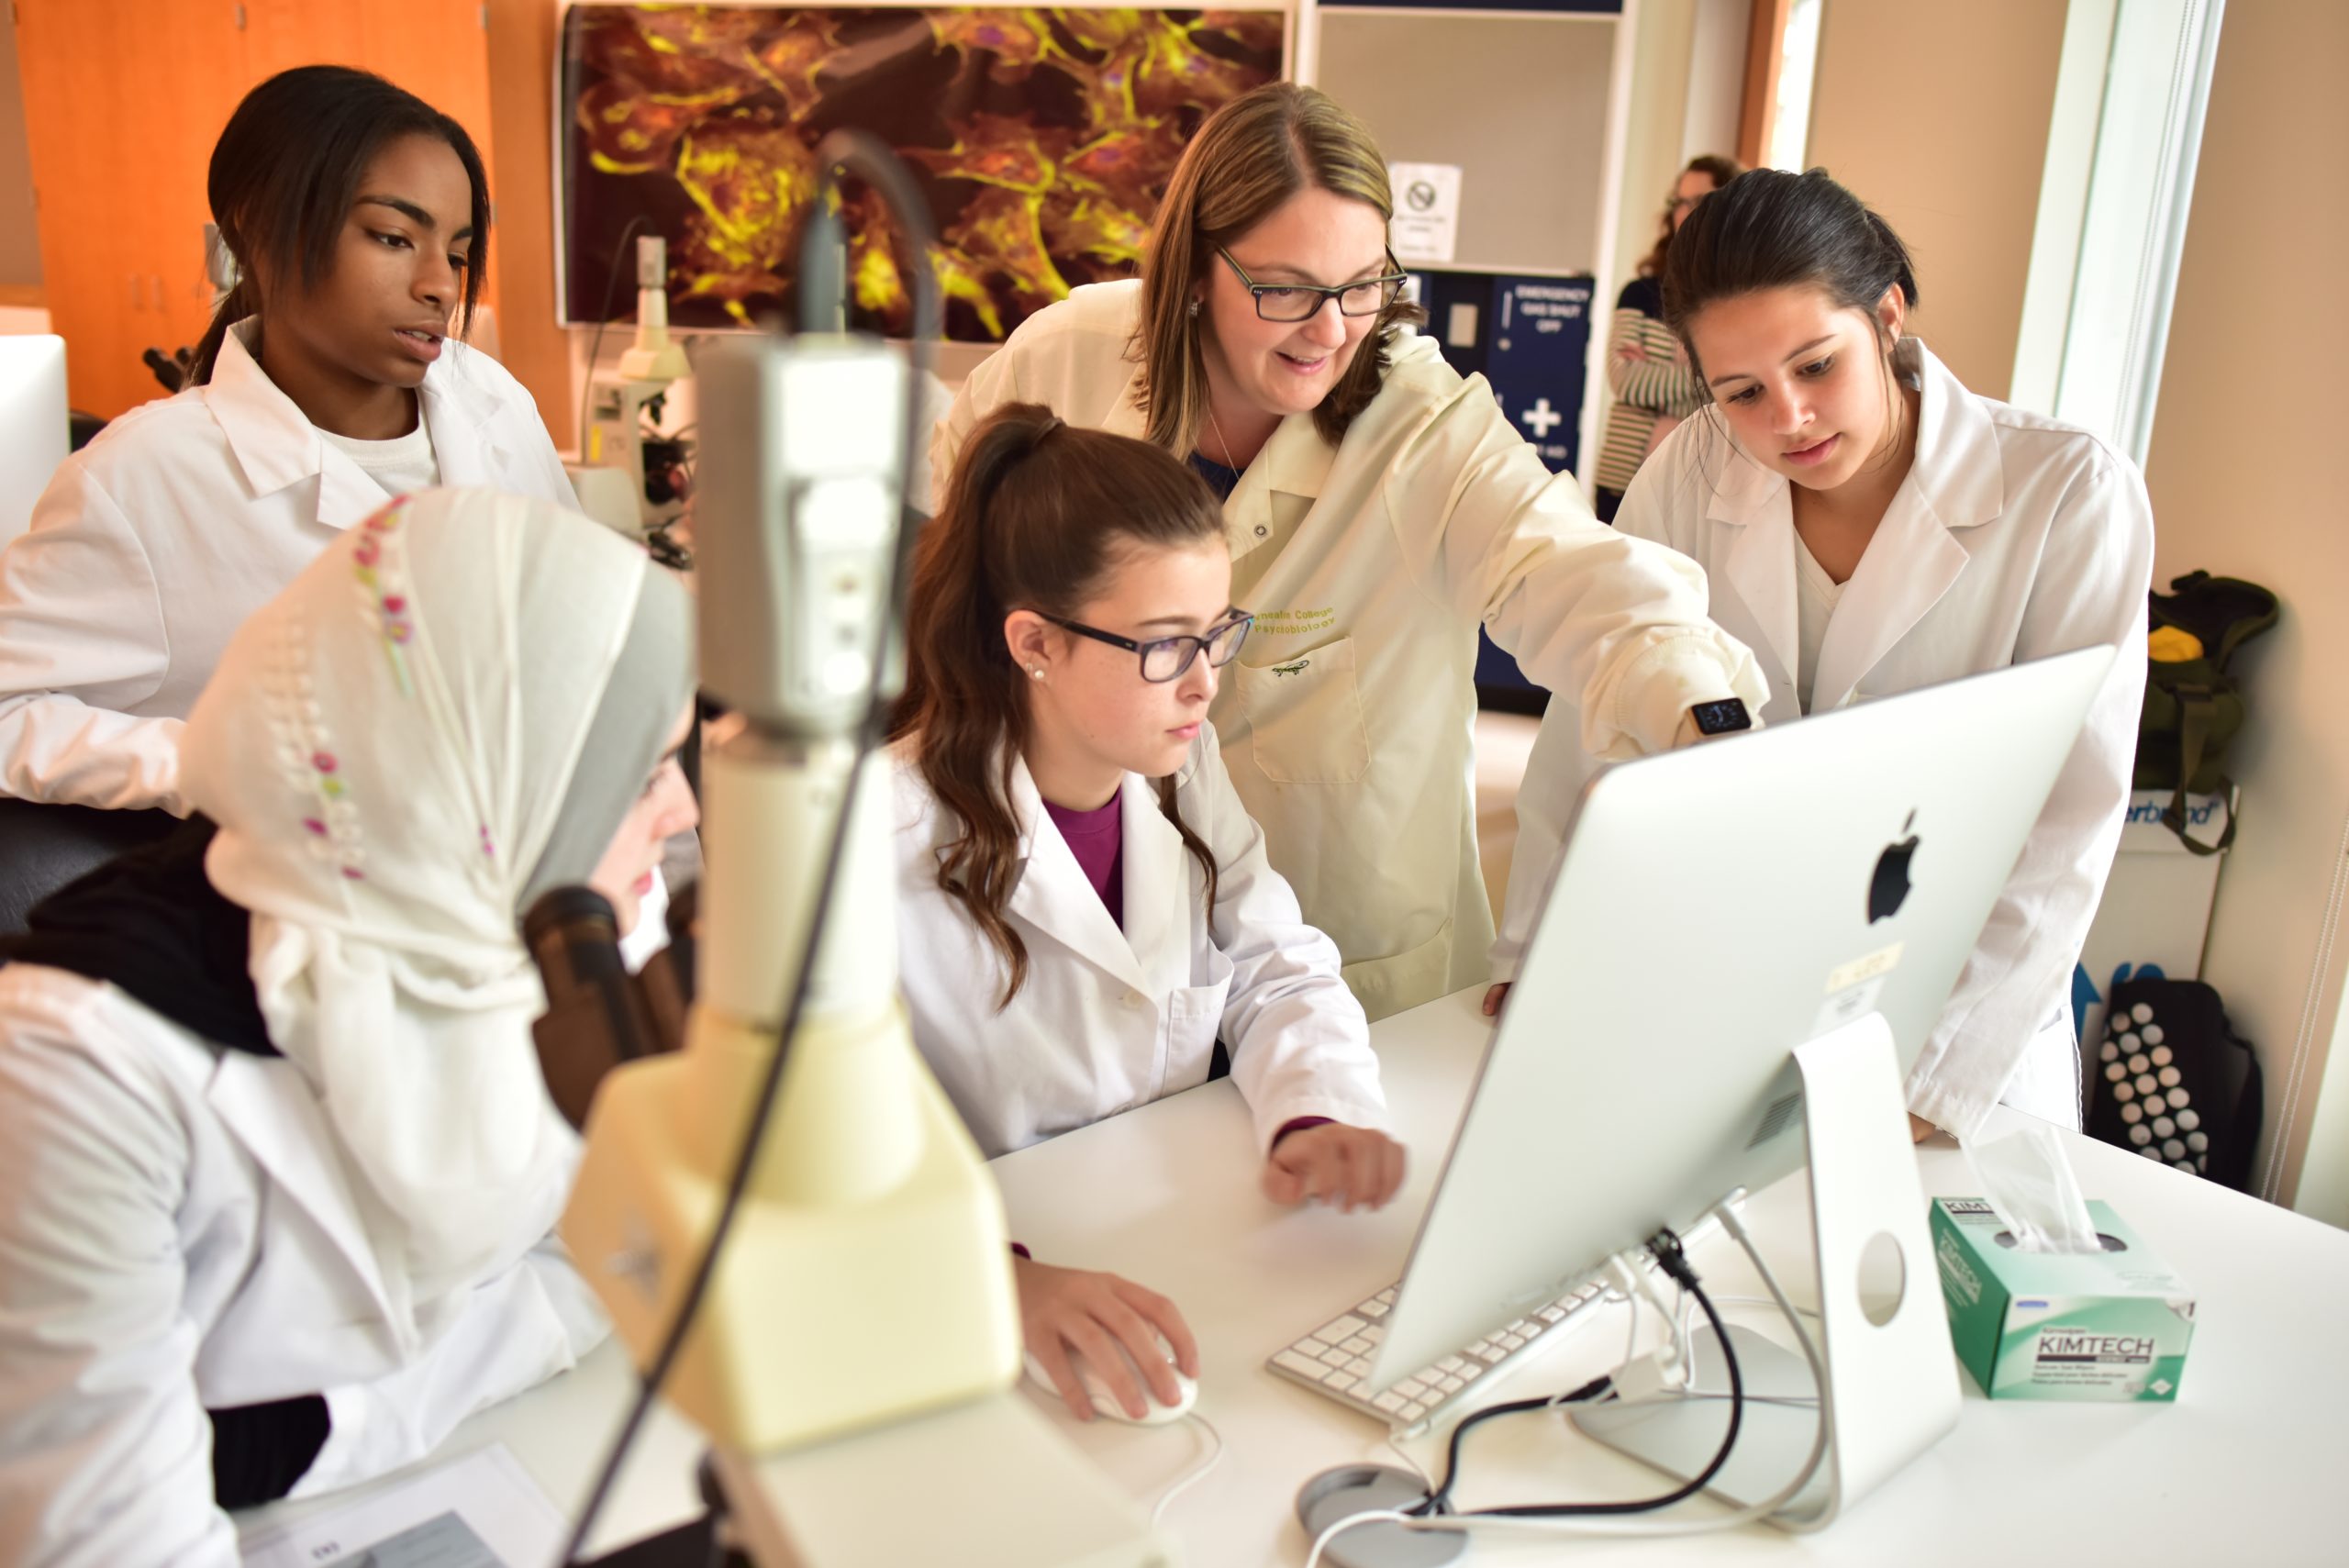 Bioengineering students work on microscopic imaging in a university lab